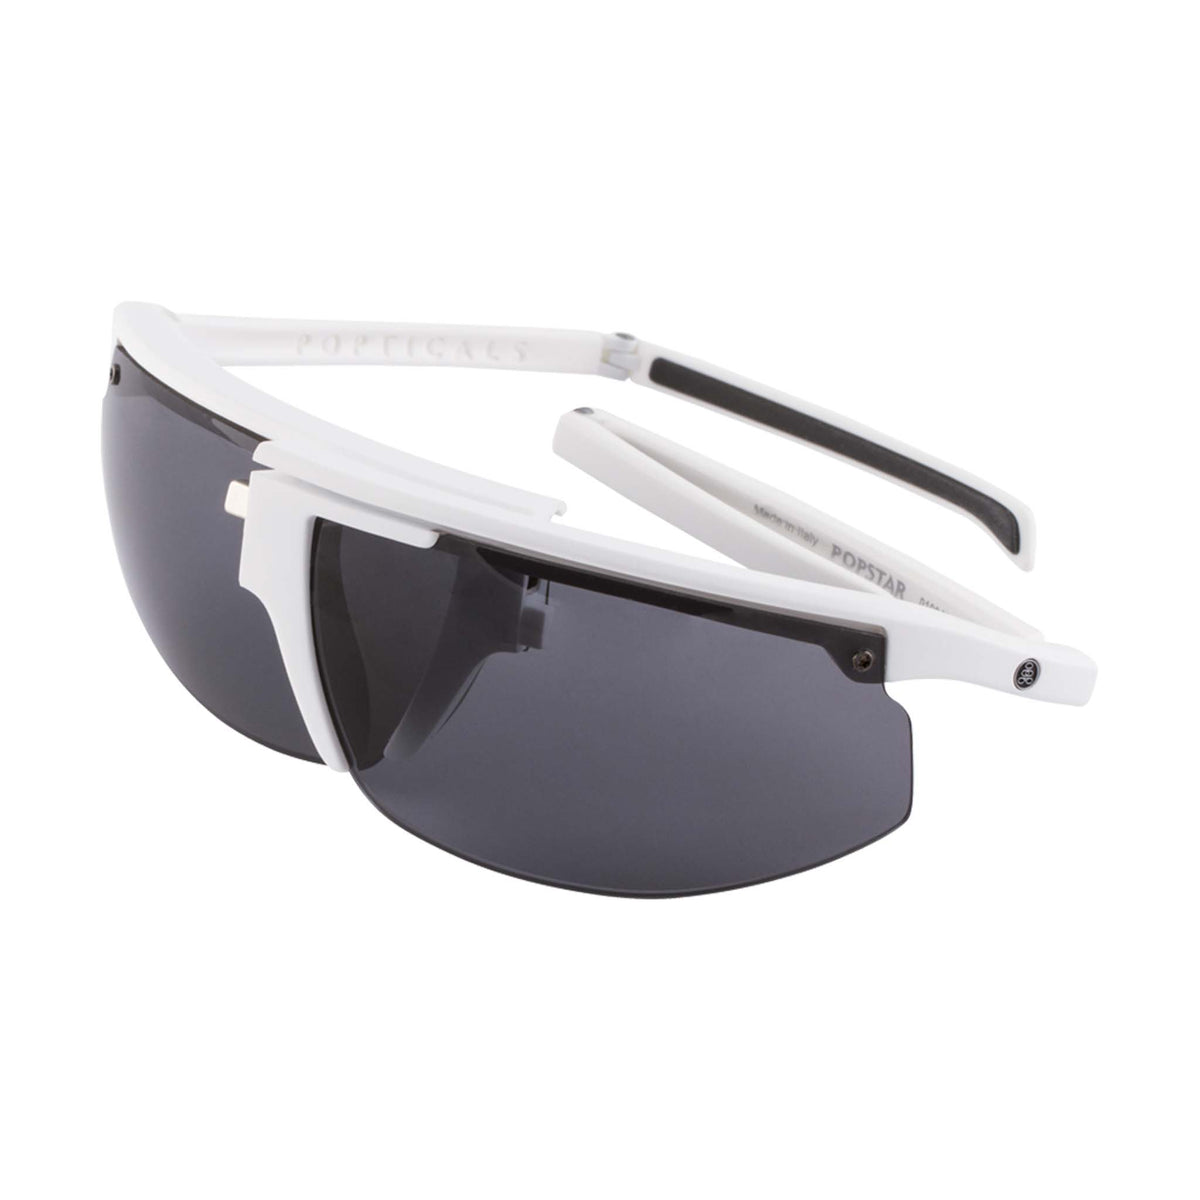 Popticals, Premium Compact Sunglasses, PopStar, 010040-WMGP, Polarized Sunglasses, Matte White Frame, Gray Lenses, Spider View